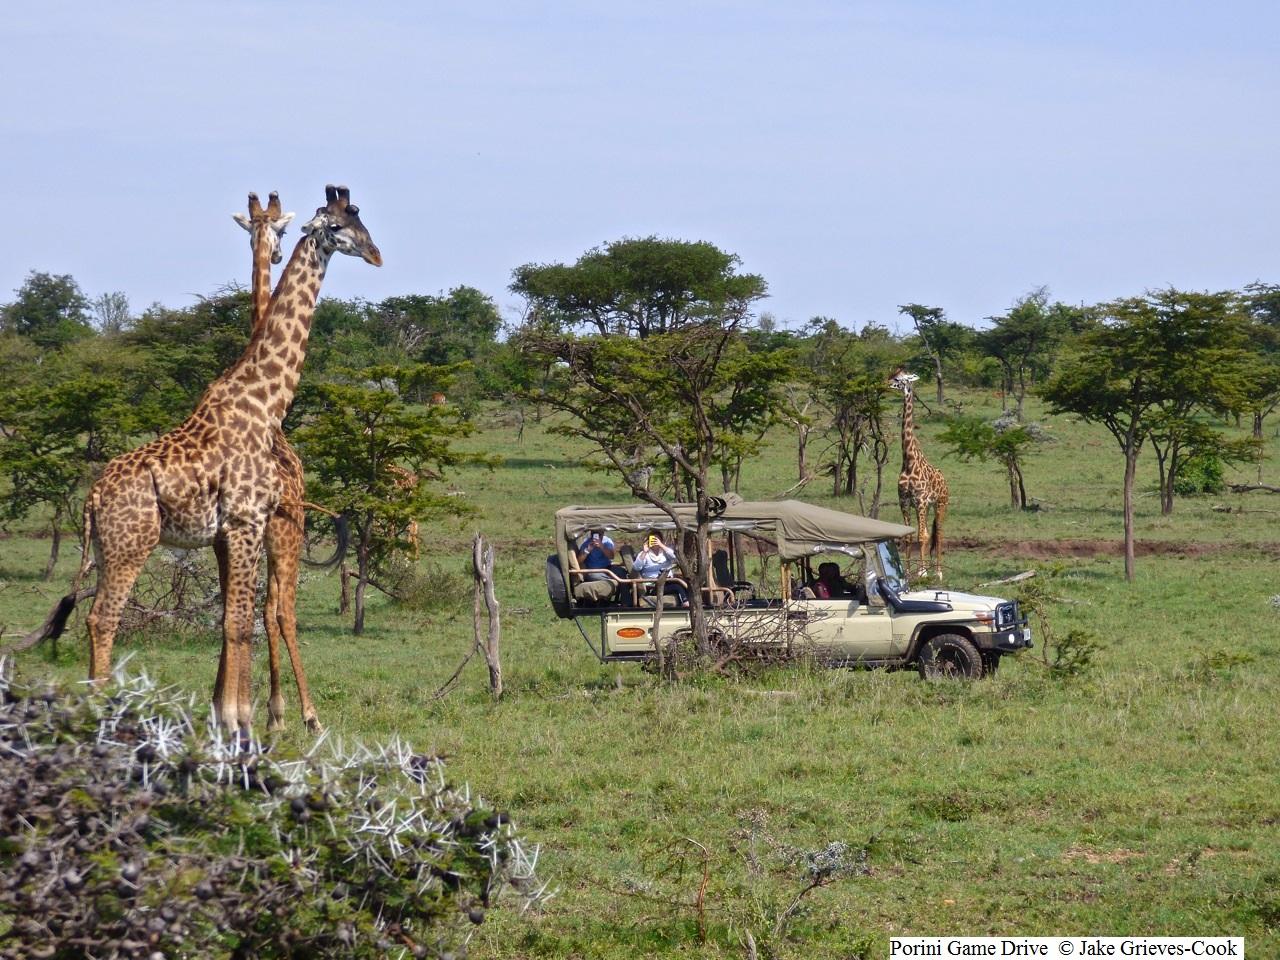 15 Unusual Animals in Kenya from Gamewatchers Safaris